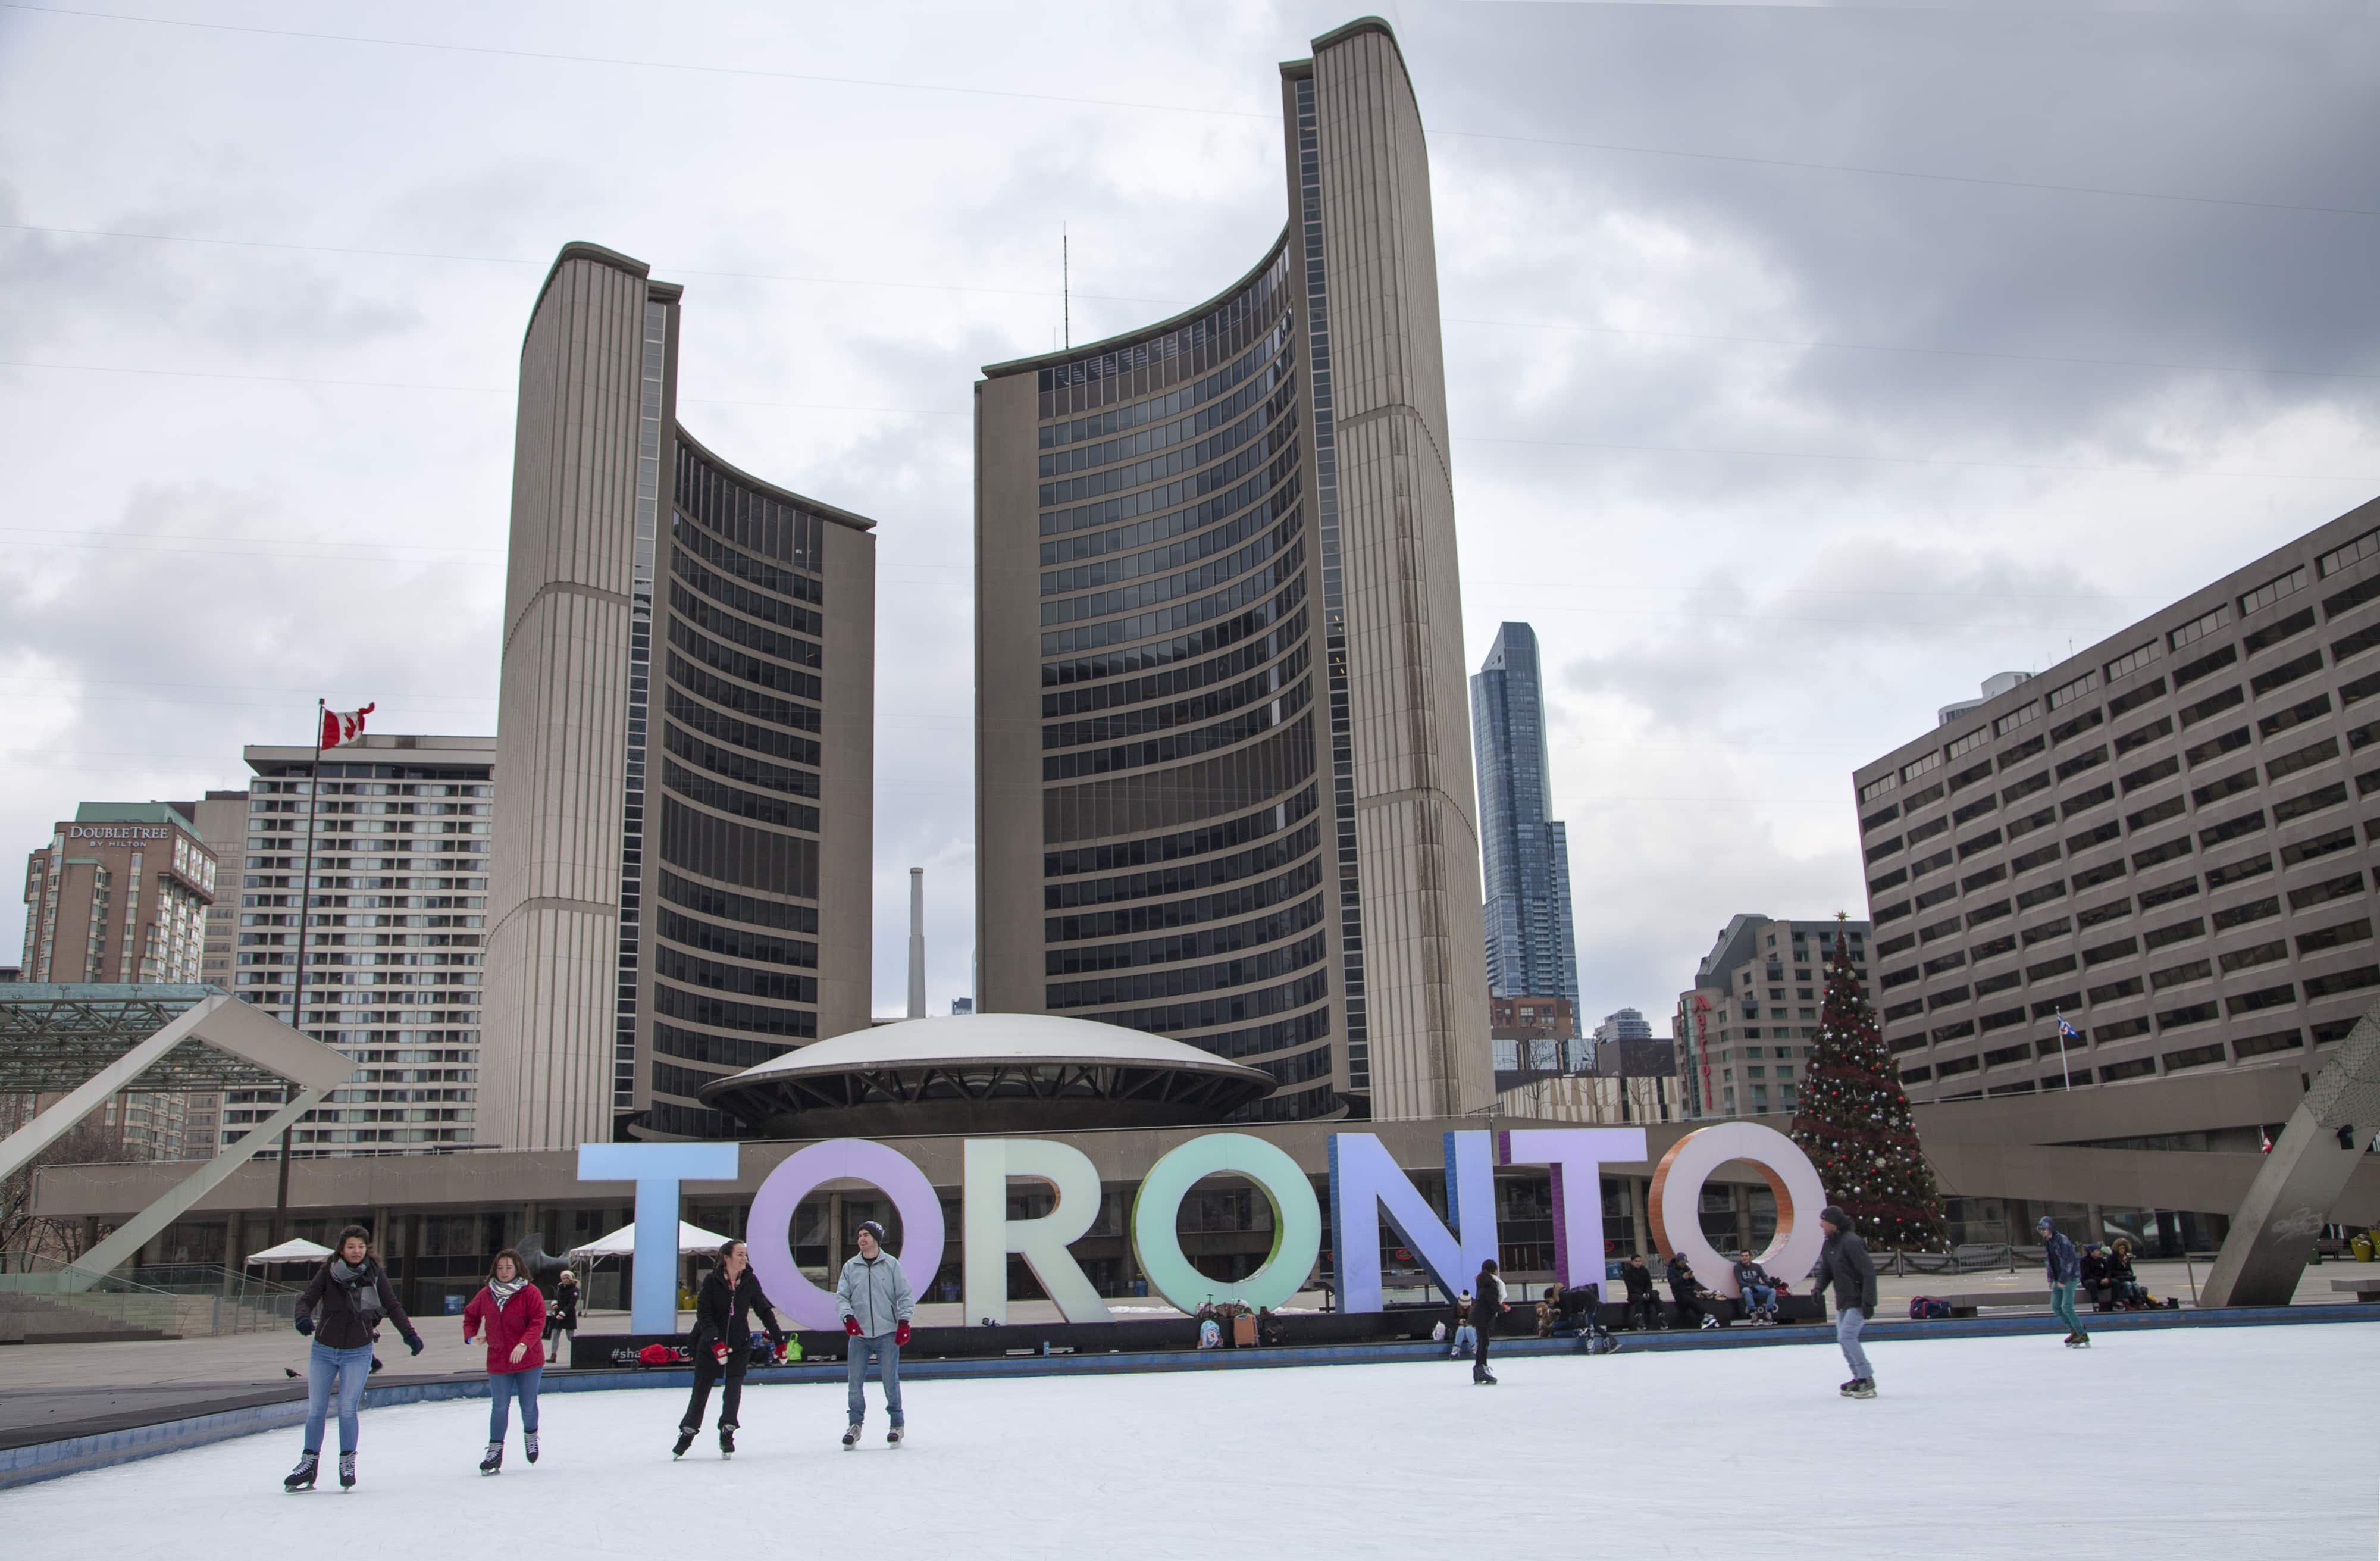 Toronto's Ice Skating Rinks: A Photo Essay